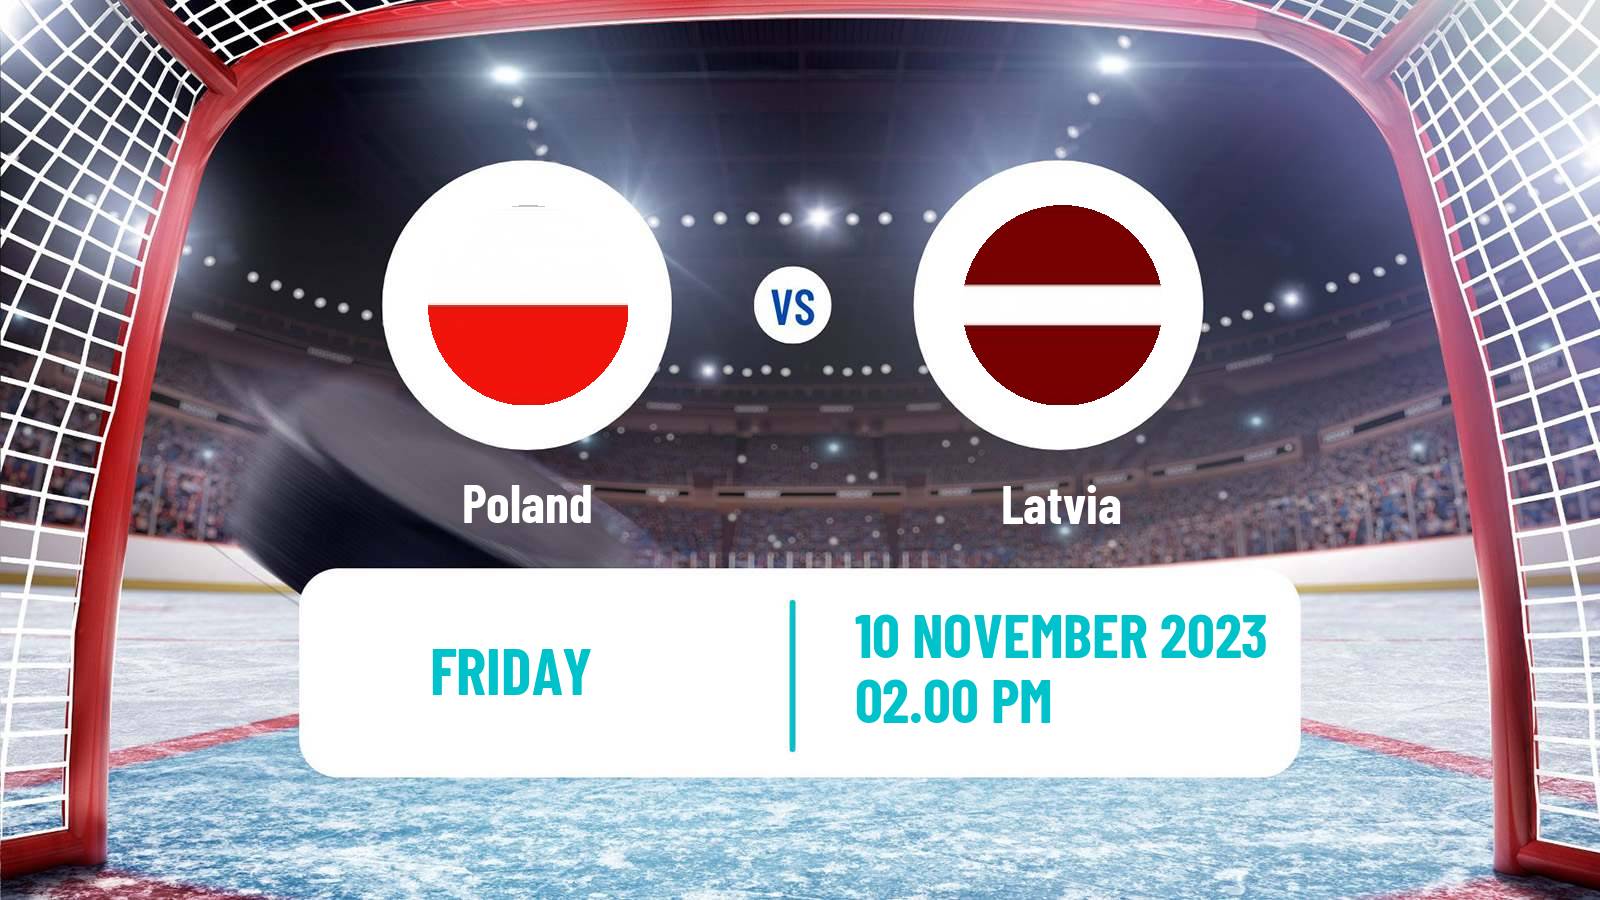 Hockey Ice Hockey International Tournament Poland Poland - Latvia